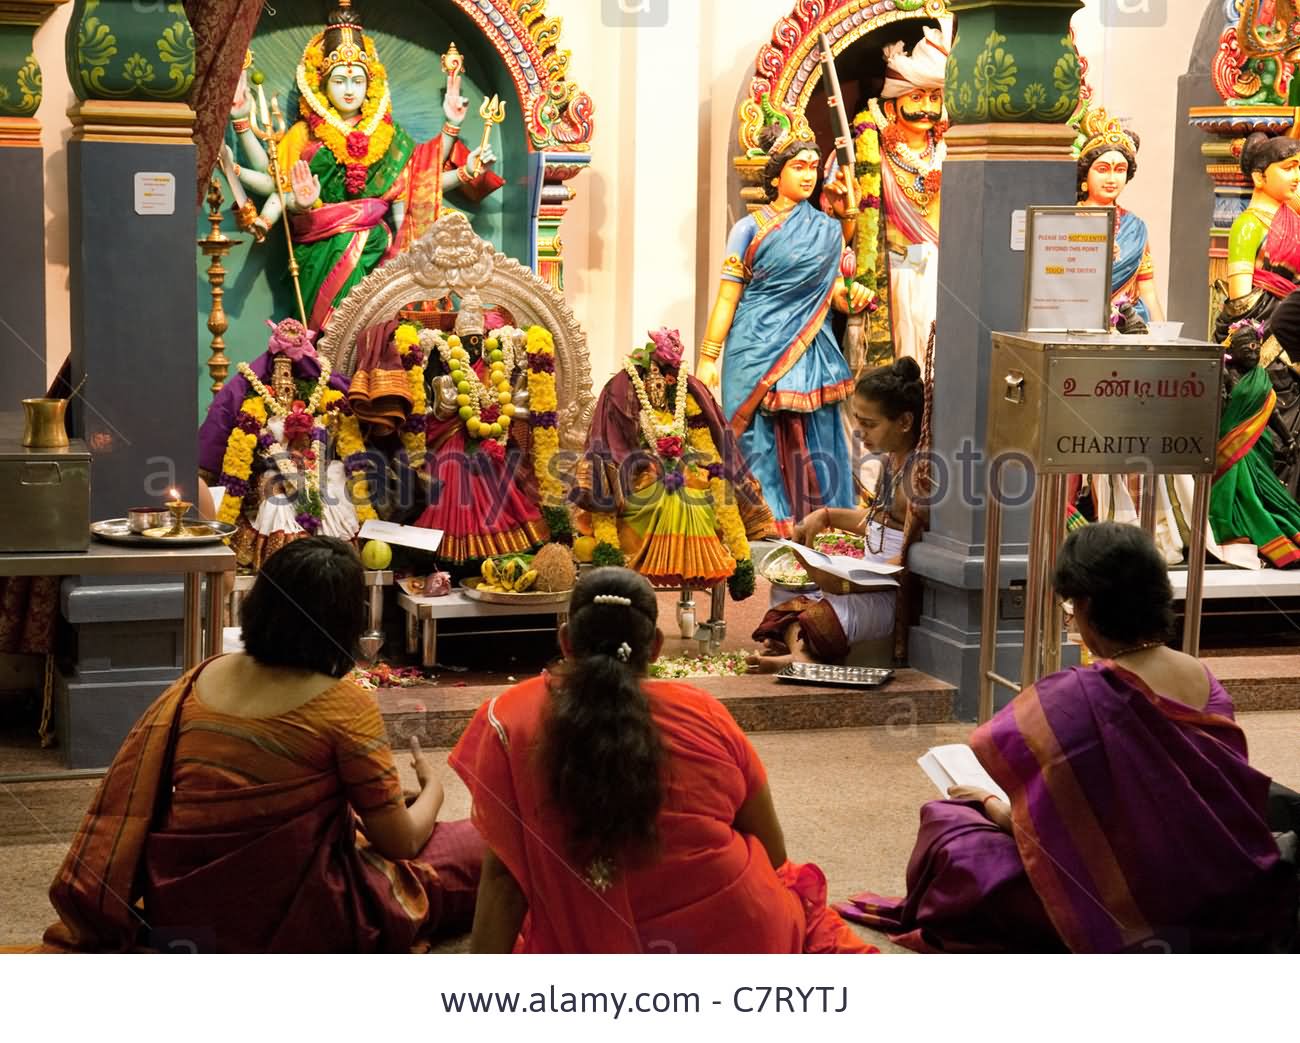 Hindu Worshippers And Deities Inside The Sri Mariamman Temple, Singapore